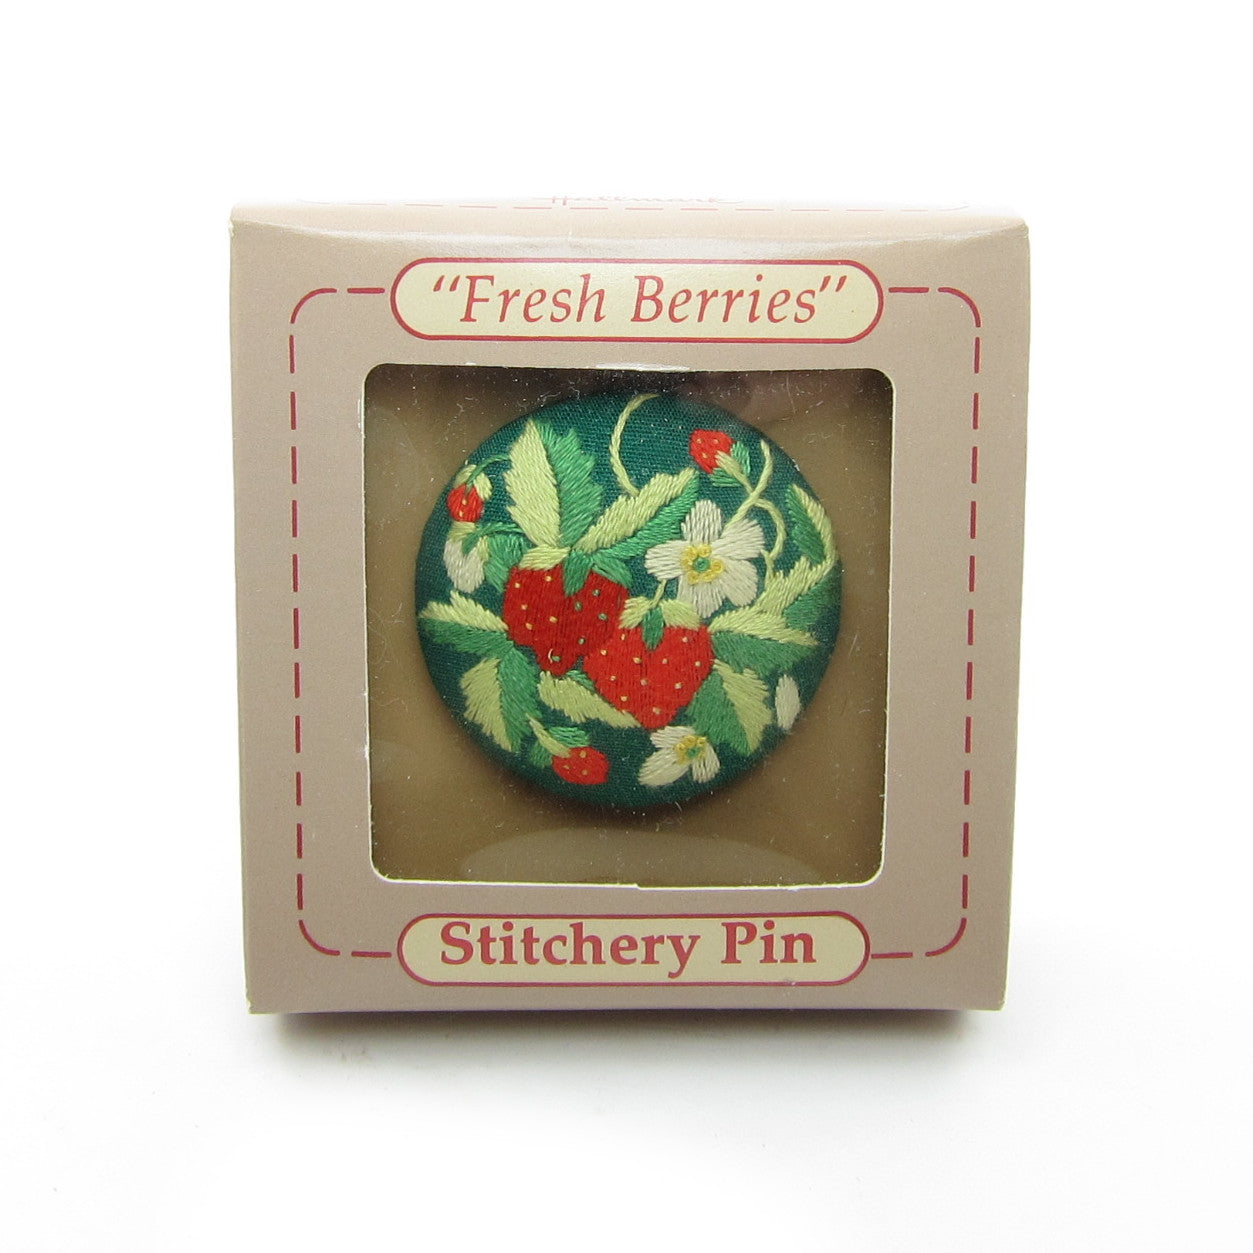 Fresh Berries Hallmark embroidered strawberries stitchery pin